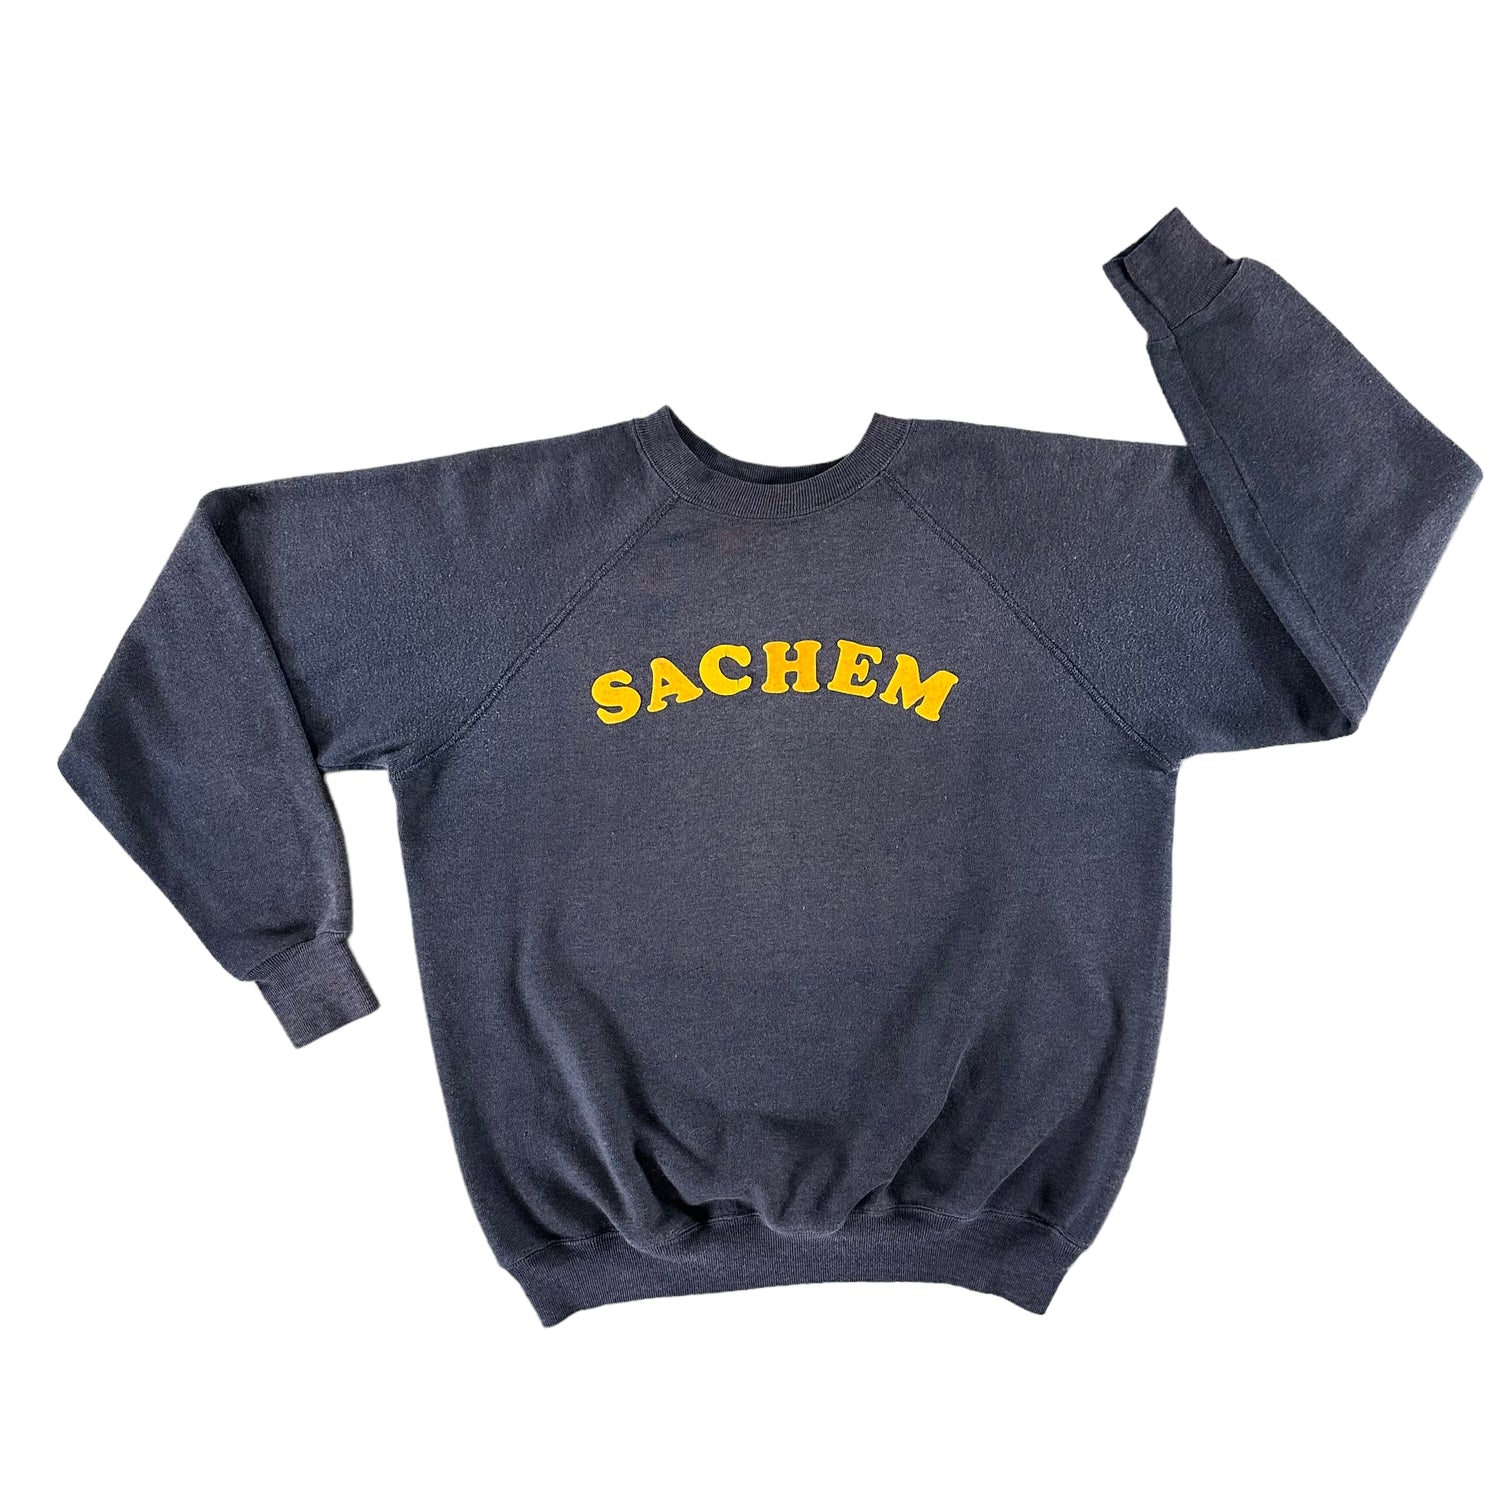 Vintage 1970s Sachem Sweatshirt size Large